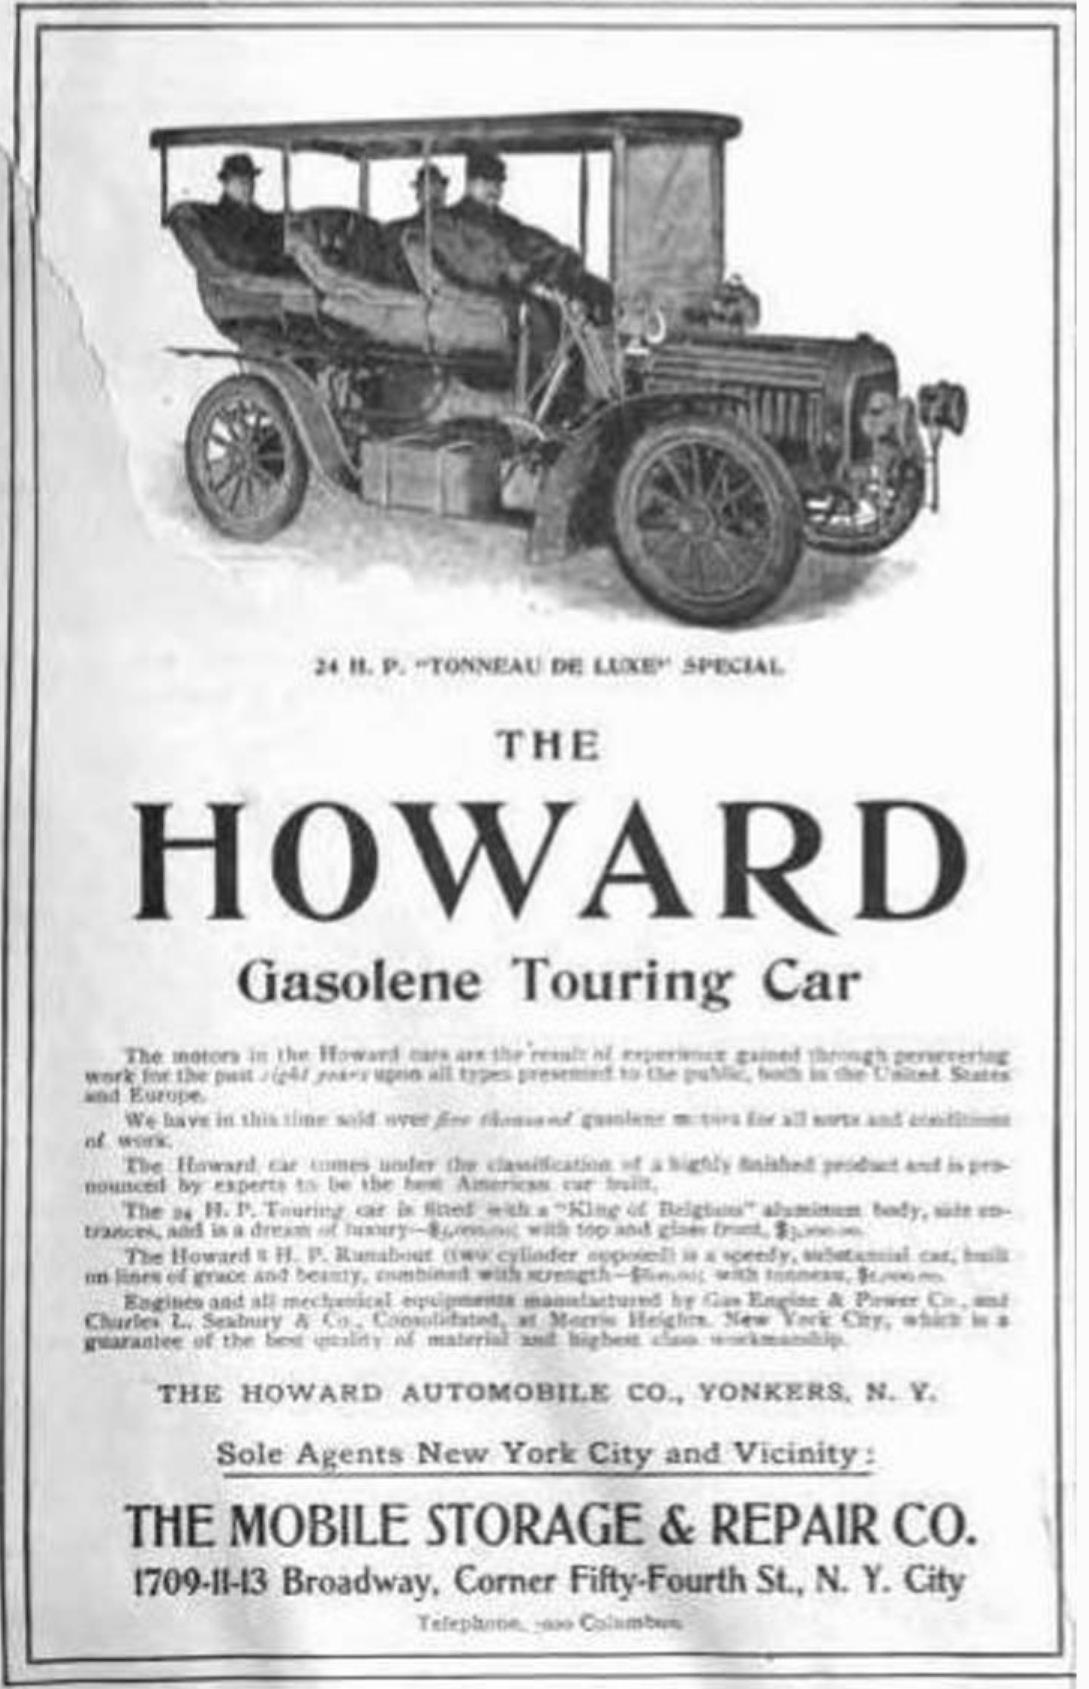 Howard 1904 68.jpg